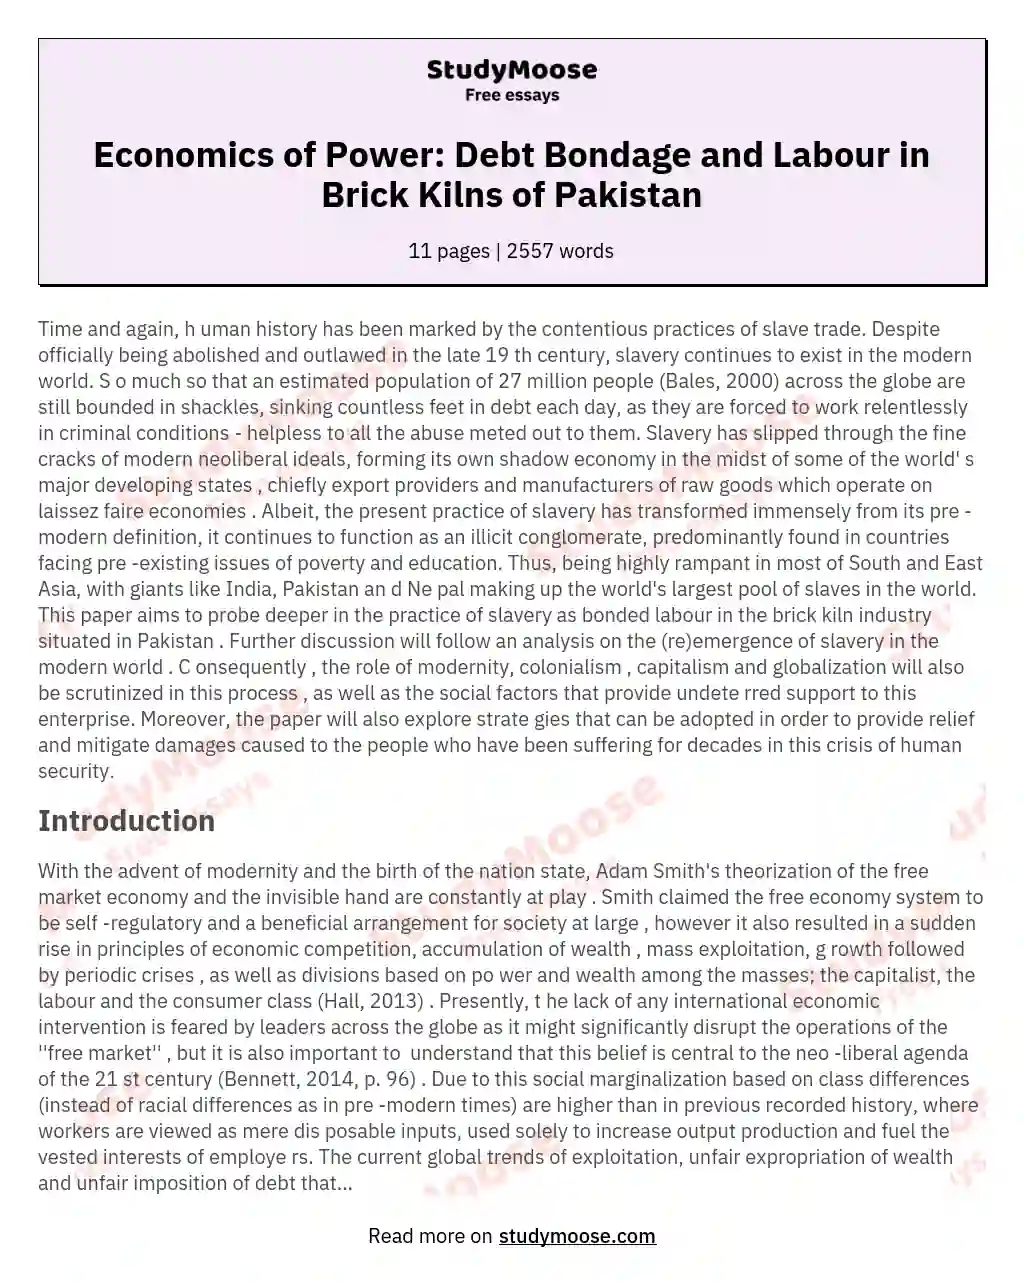 Economics of Power: Debt Bondage and Labour in Brick Kilns of Pakistan essay